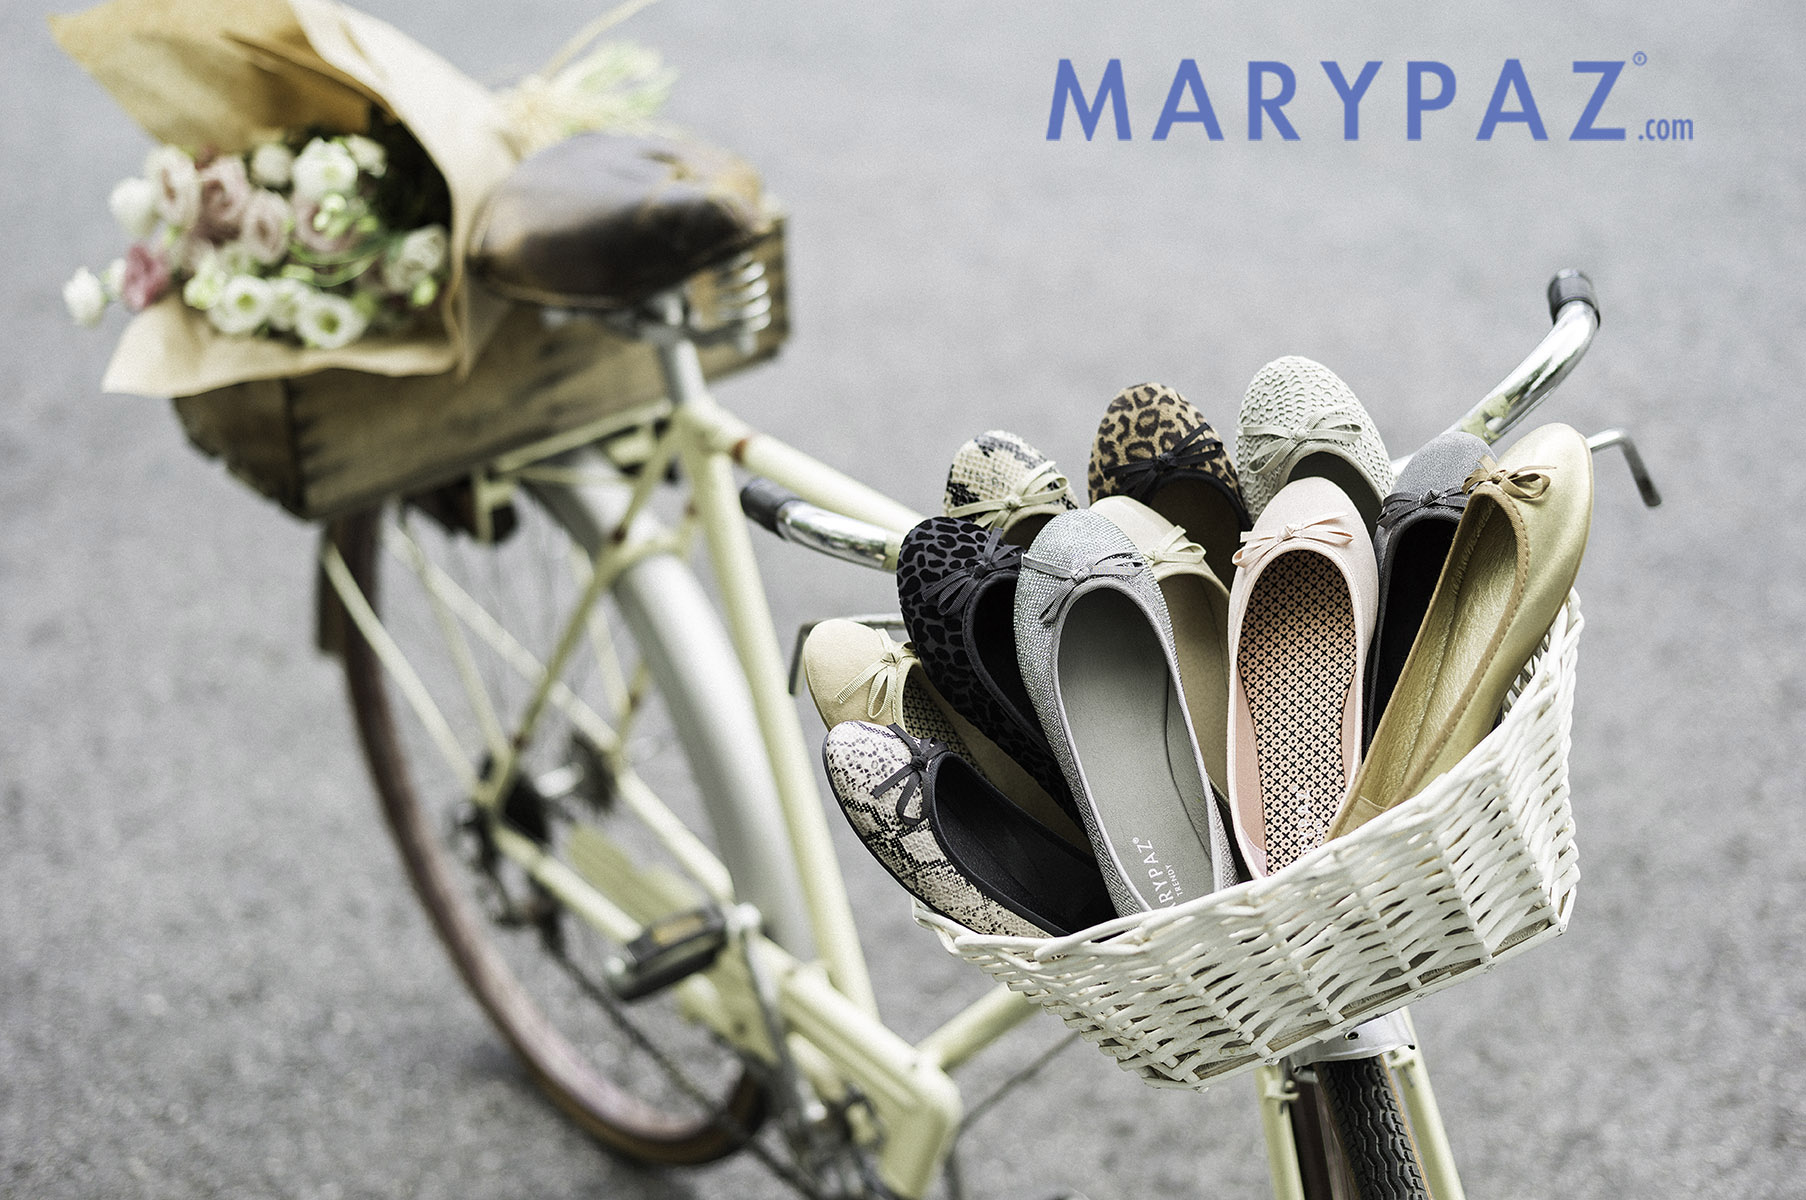 Los Martínez Banco de bicis Alquiler bicicletas Marypaz calzado bailarinas moda